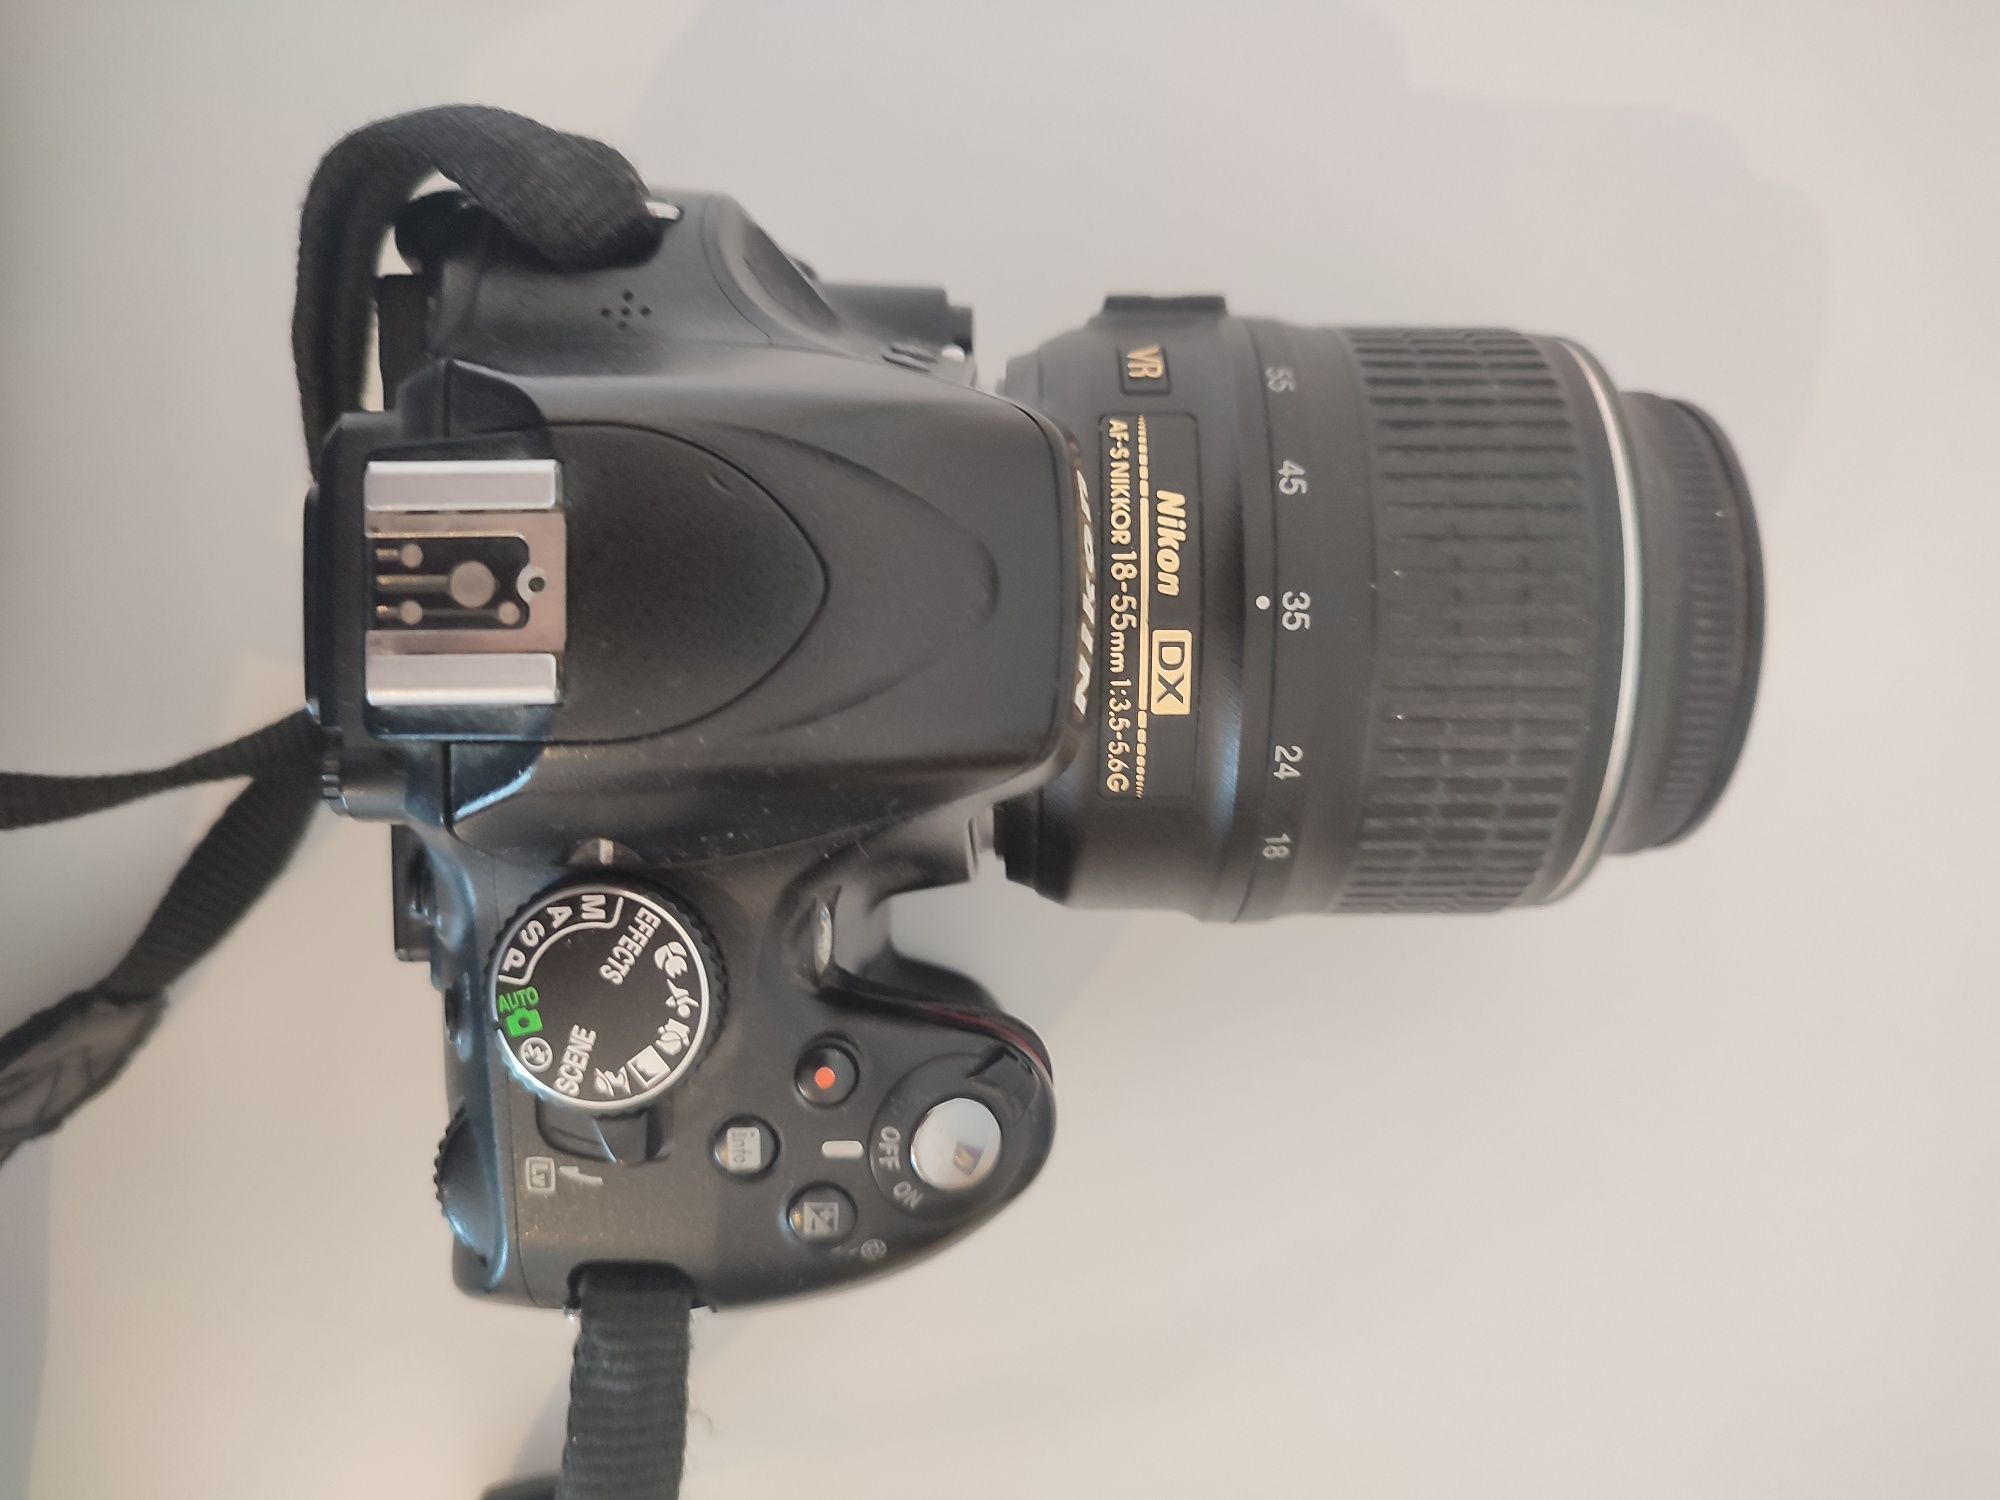 Фотоаппарат Nikon D5100 + объектив 18-55mm